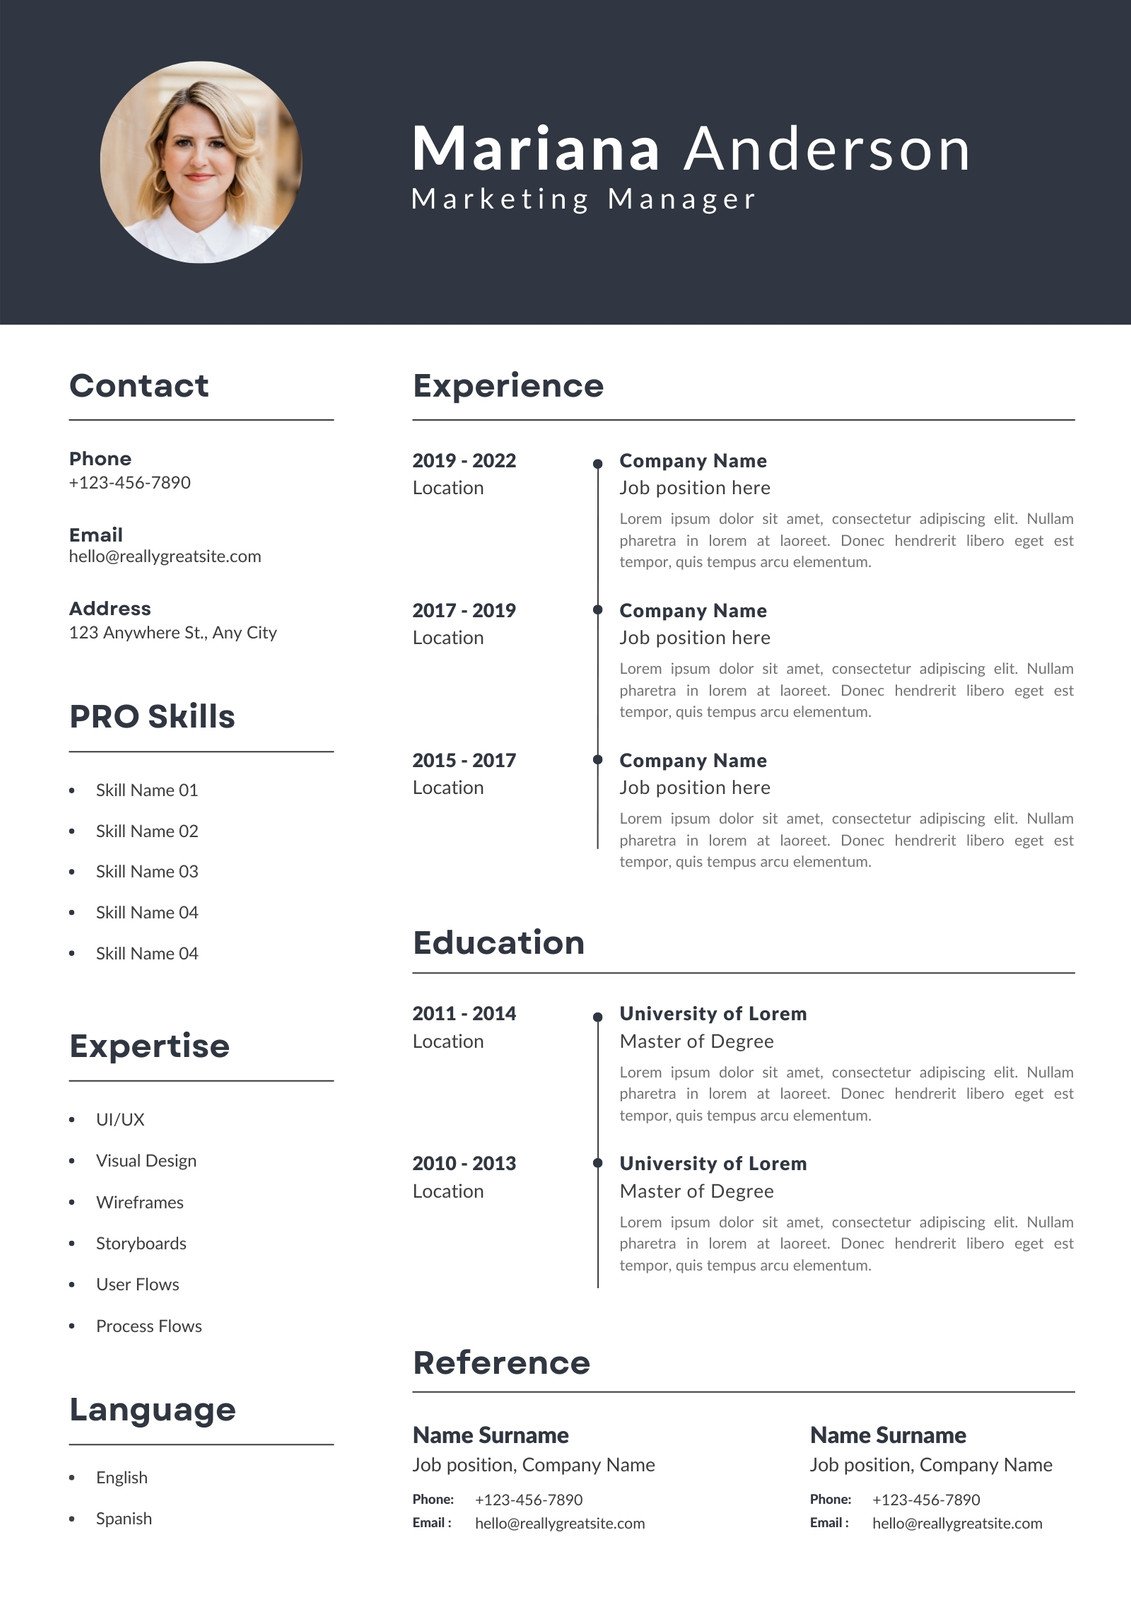 resume timeline infographic